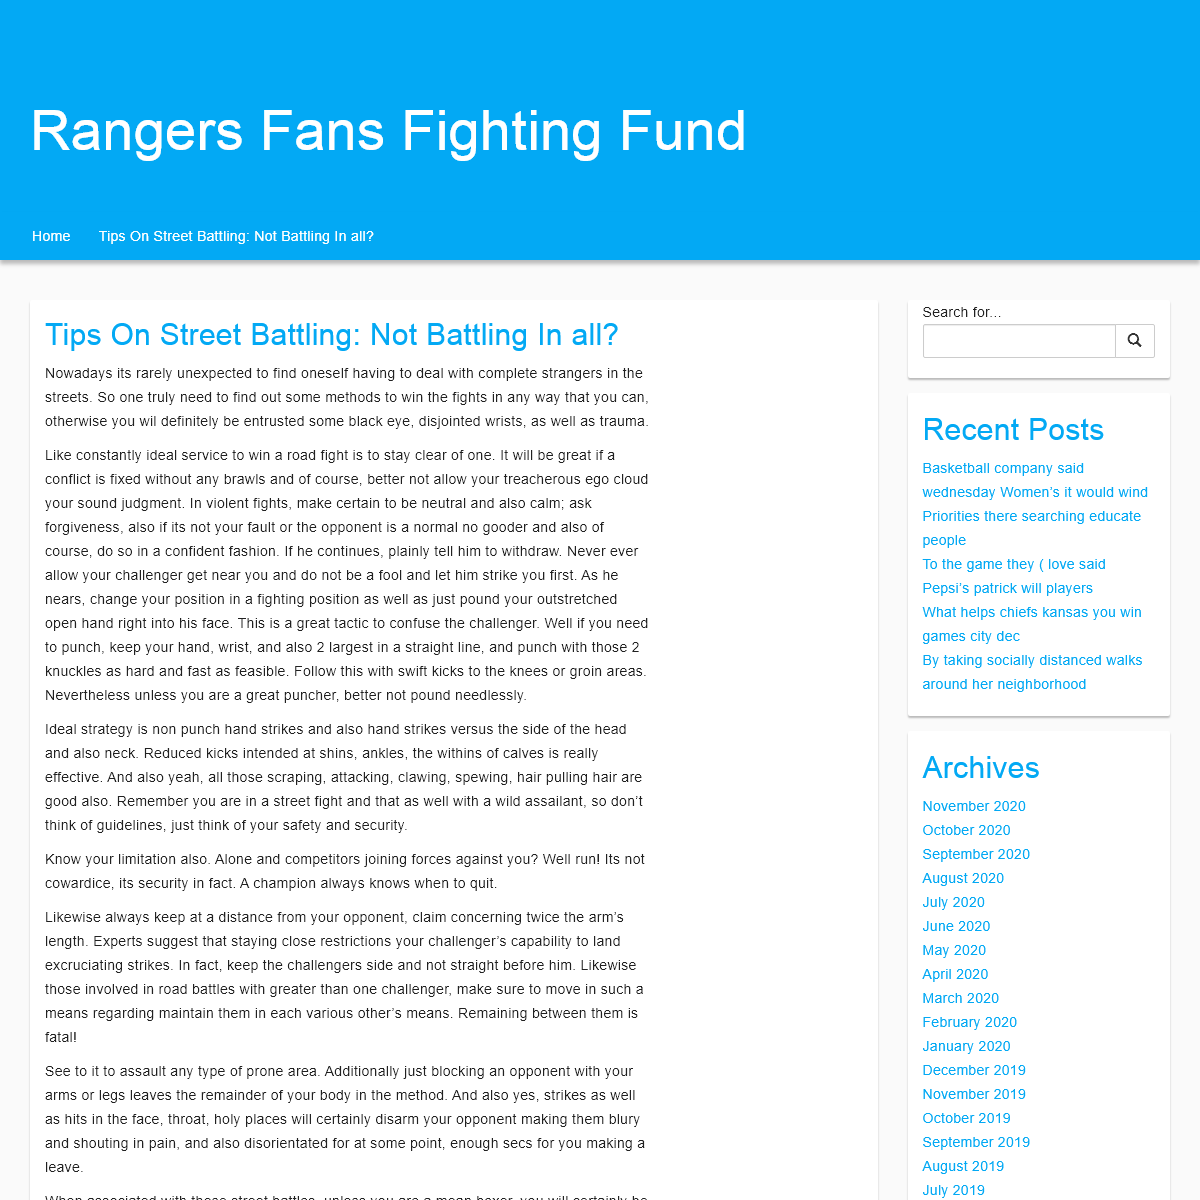 A complete backup of rangersfansfightingfund.com